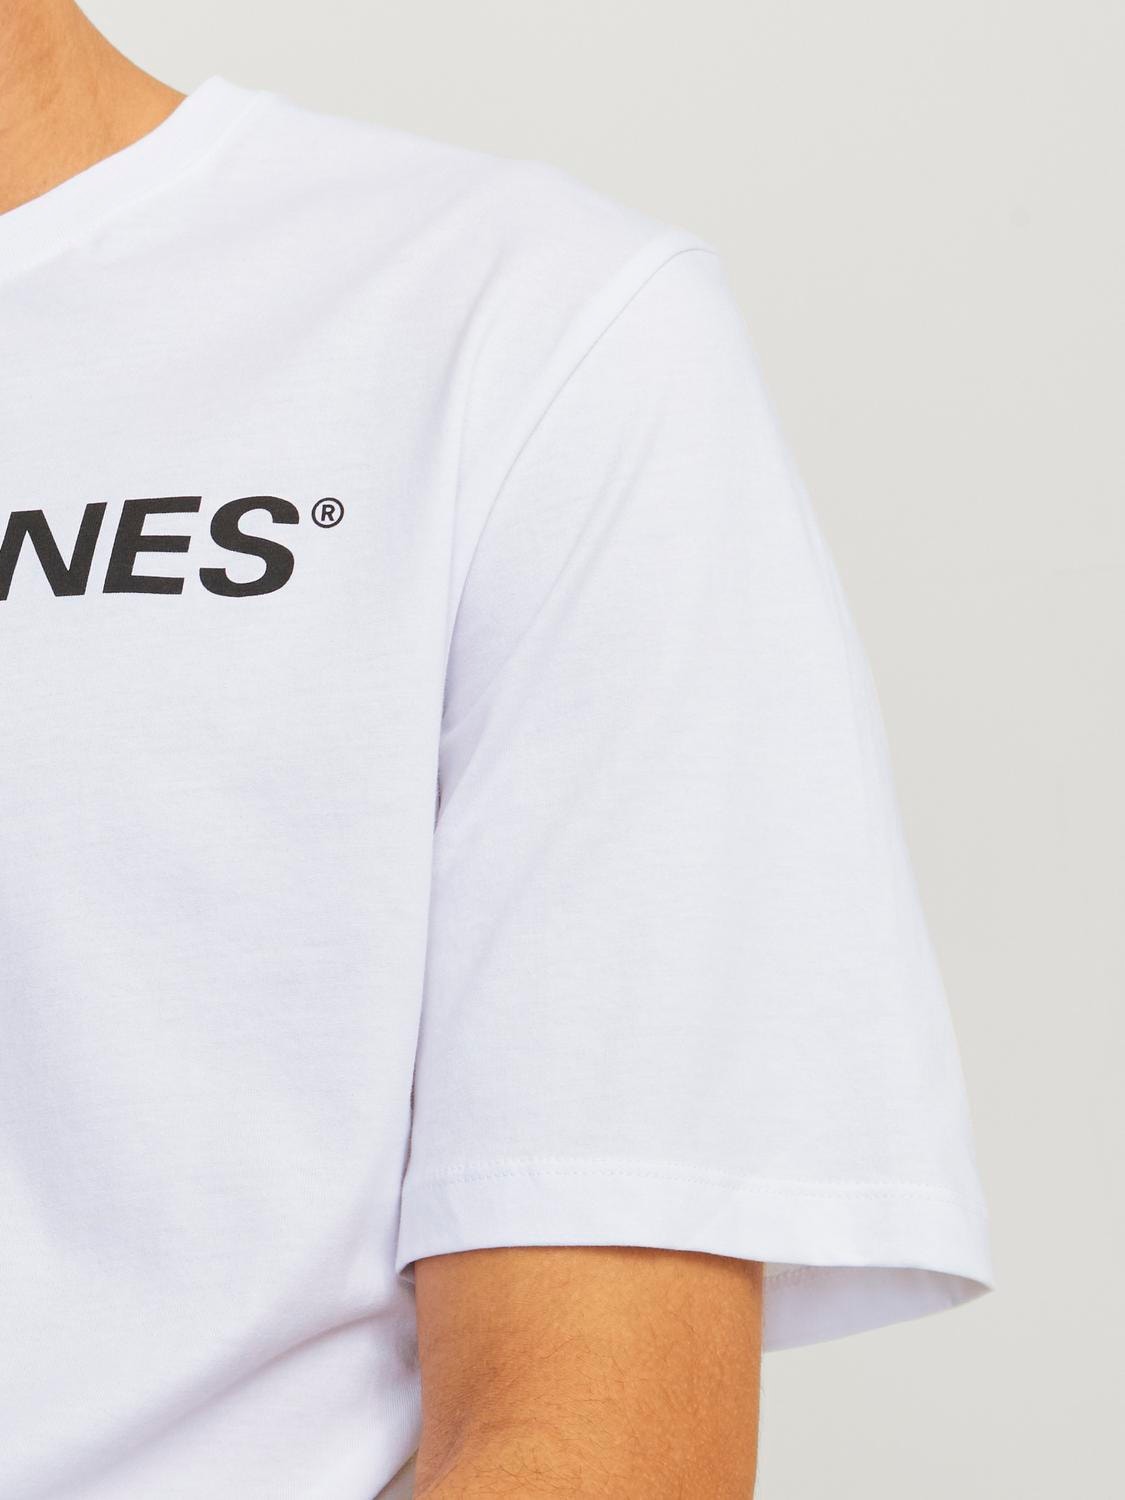 Jack & Jones Logo O-Neck T-shirt -White - 12137126